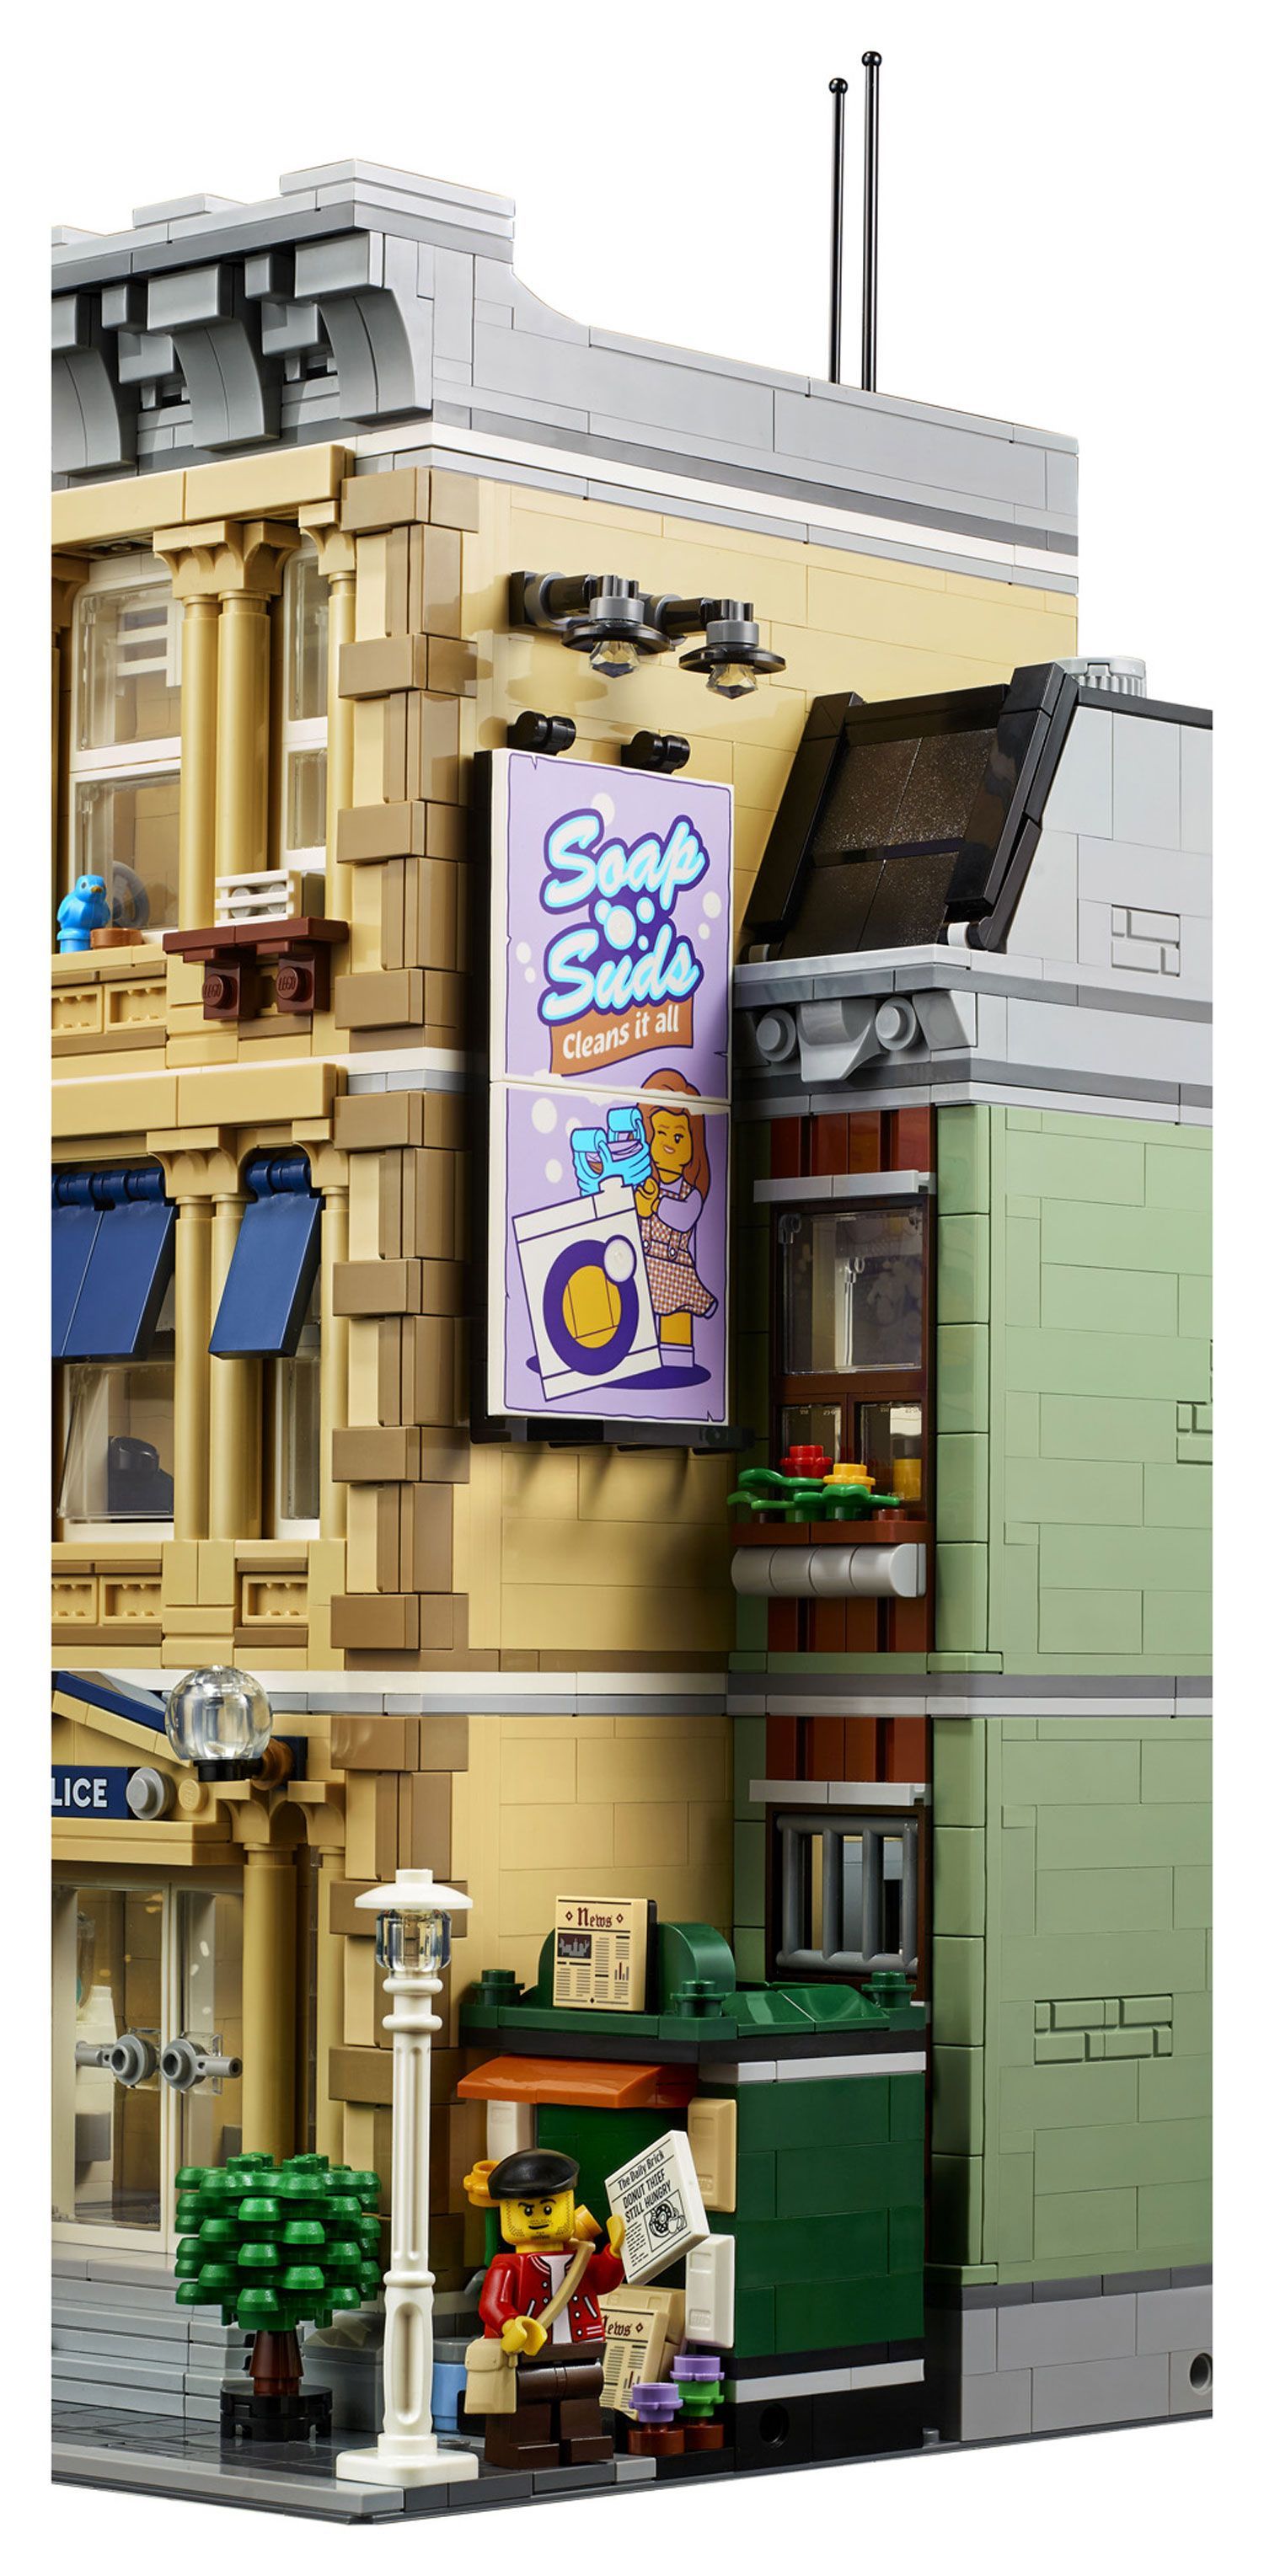 LEGO 10278 Police Station: Das ist das Modular Building 2021